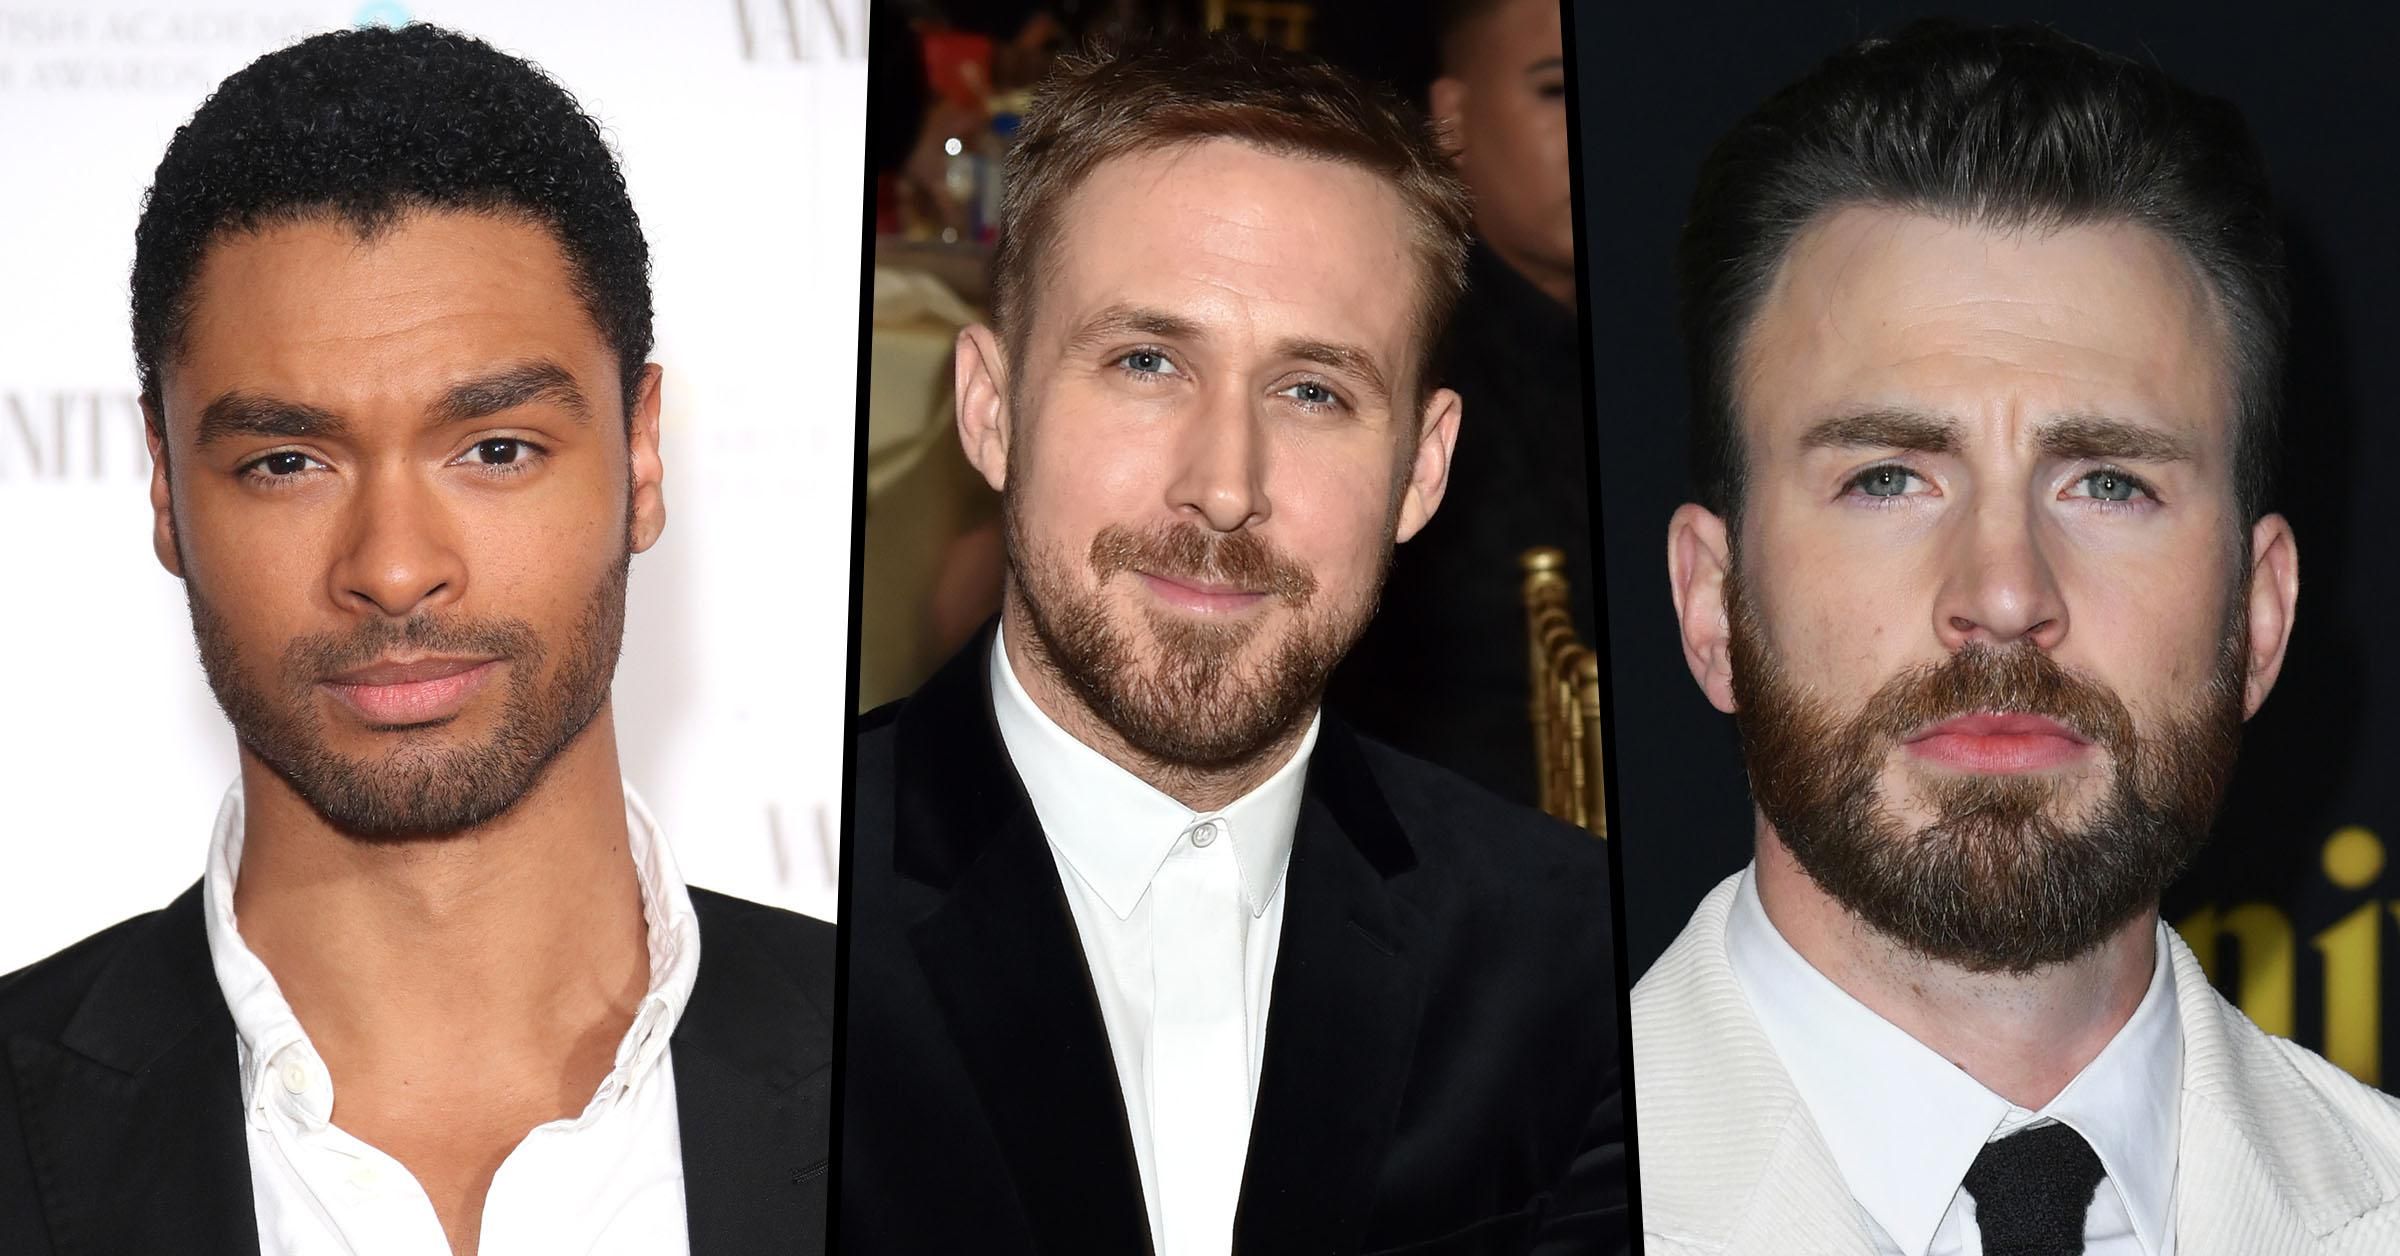 The Gray Man film details, Regé-Jean Page, Ryan Gosling, Chris Evans